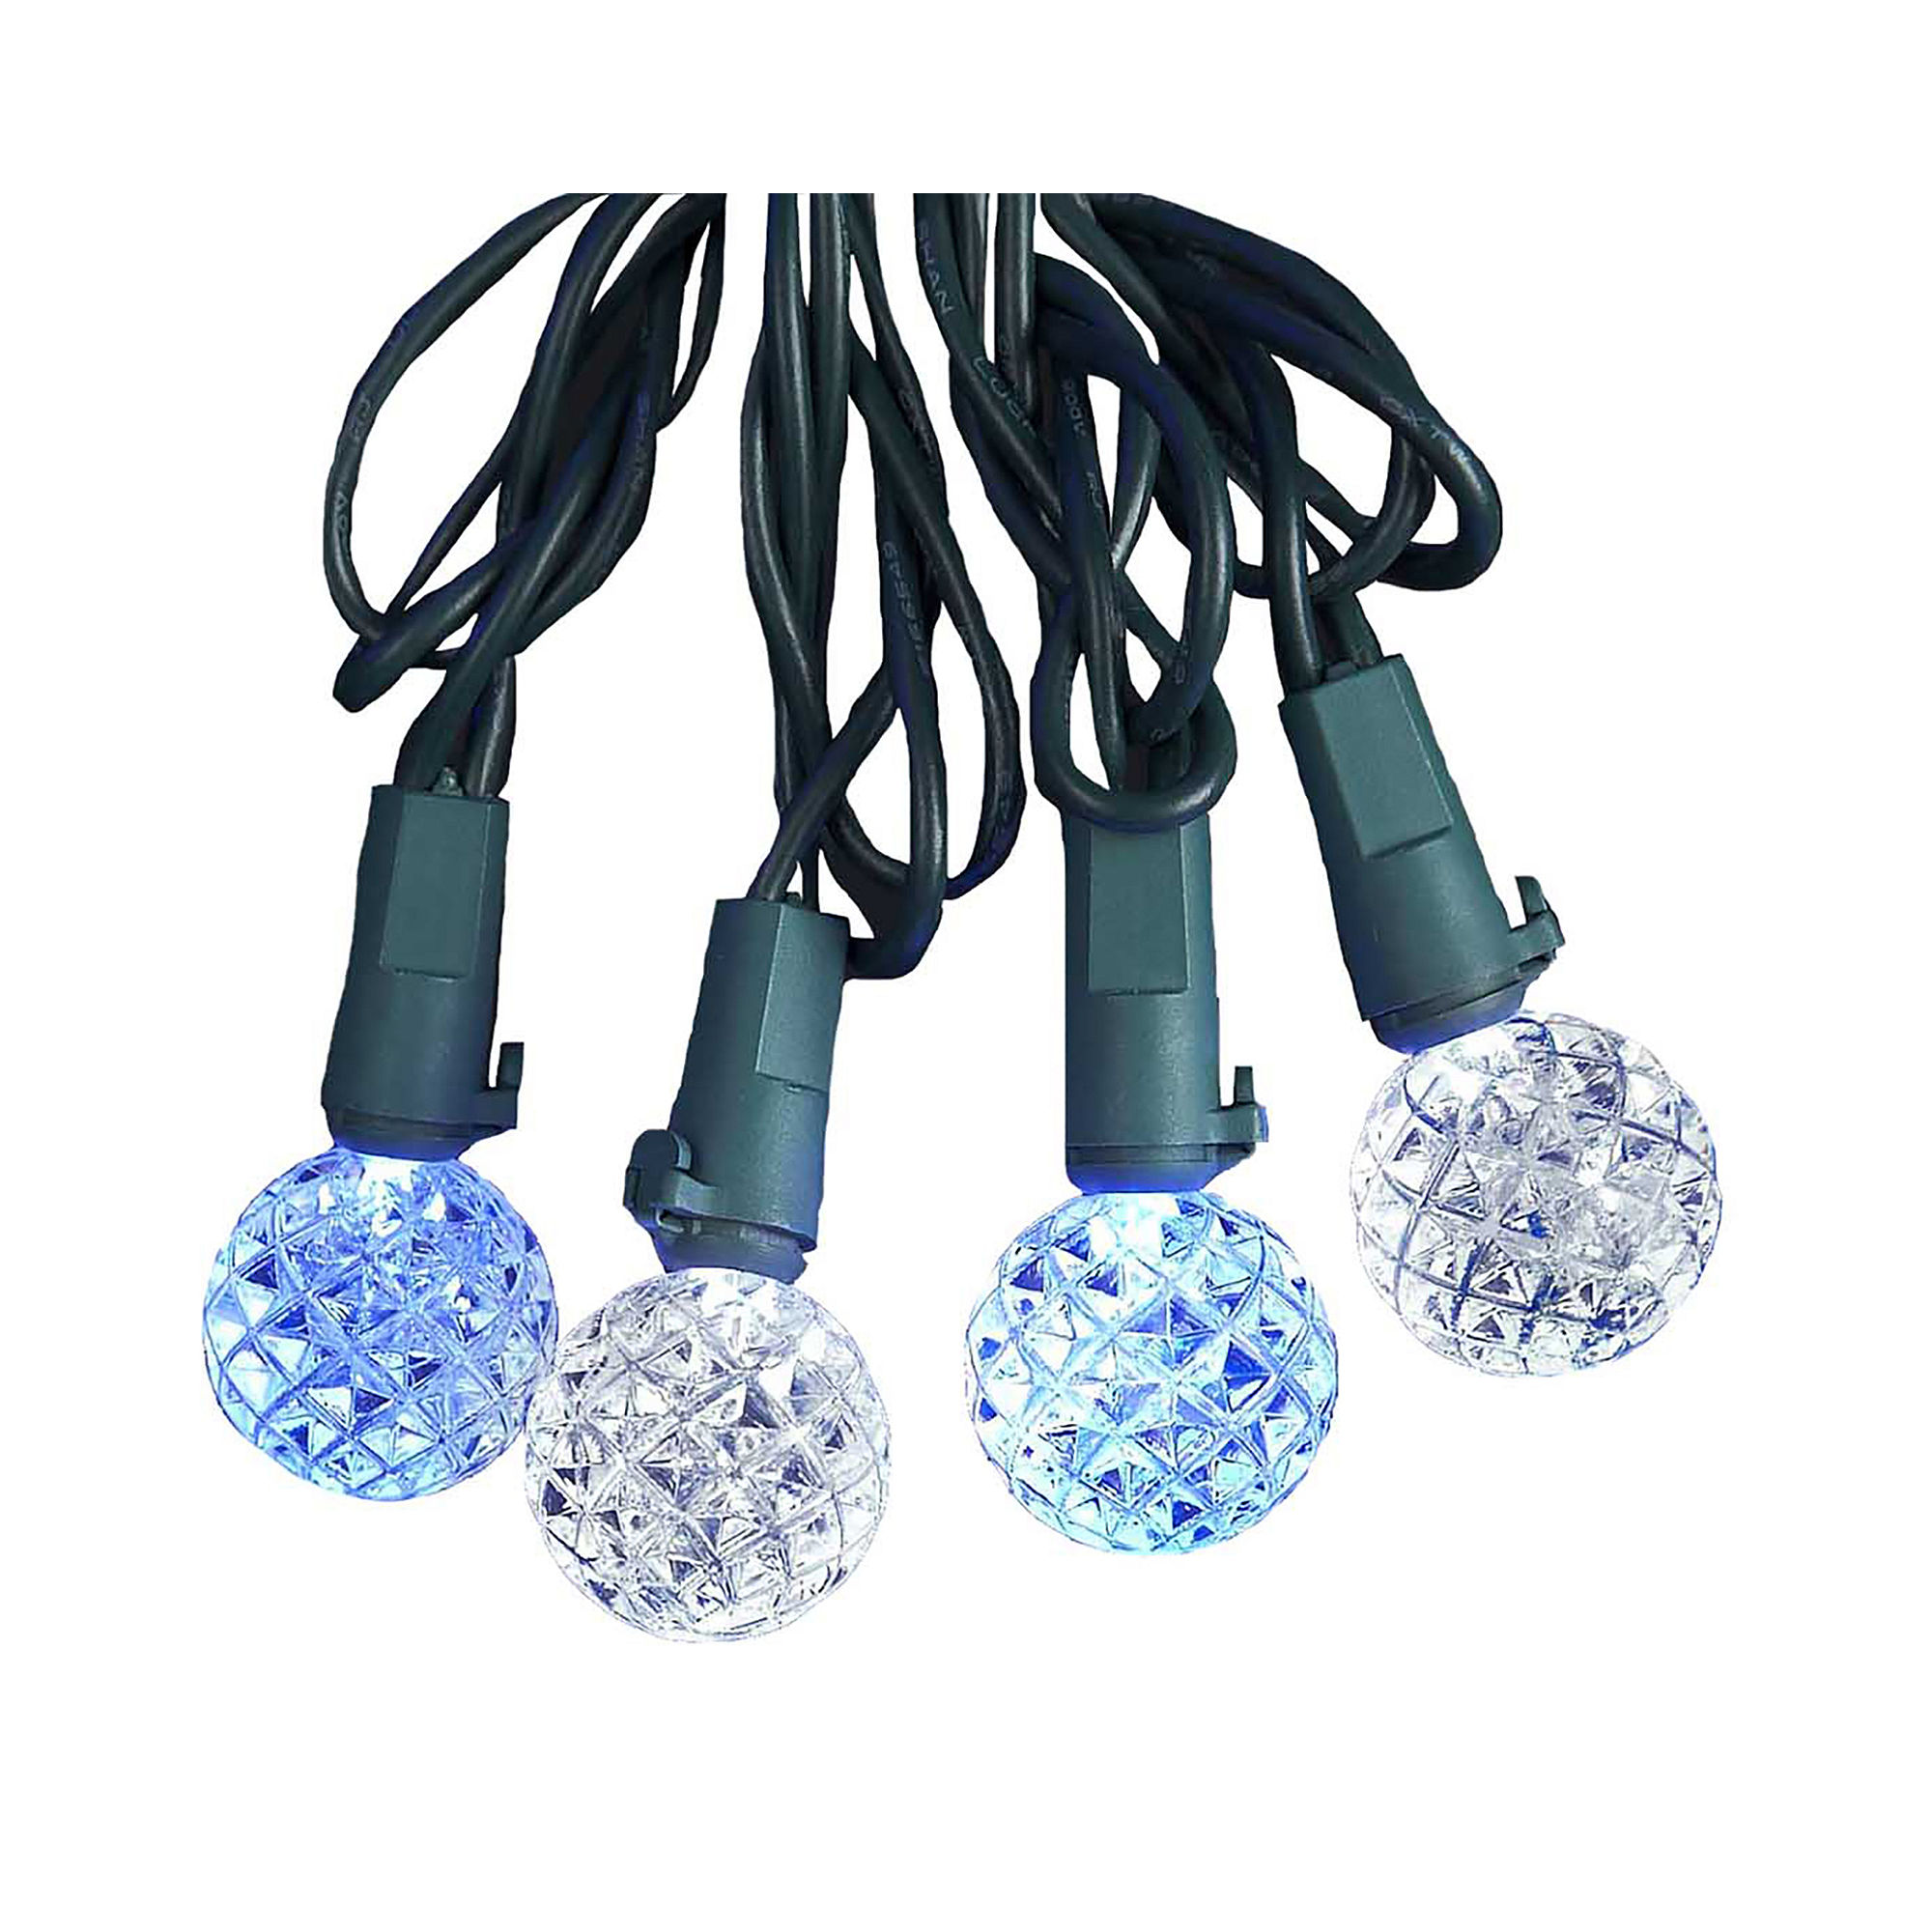 UPC 086131211140 product image for Kurt Adler 25-Light LED G8 White and Blue Diamond Cut Light Set | upcitemdb.com